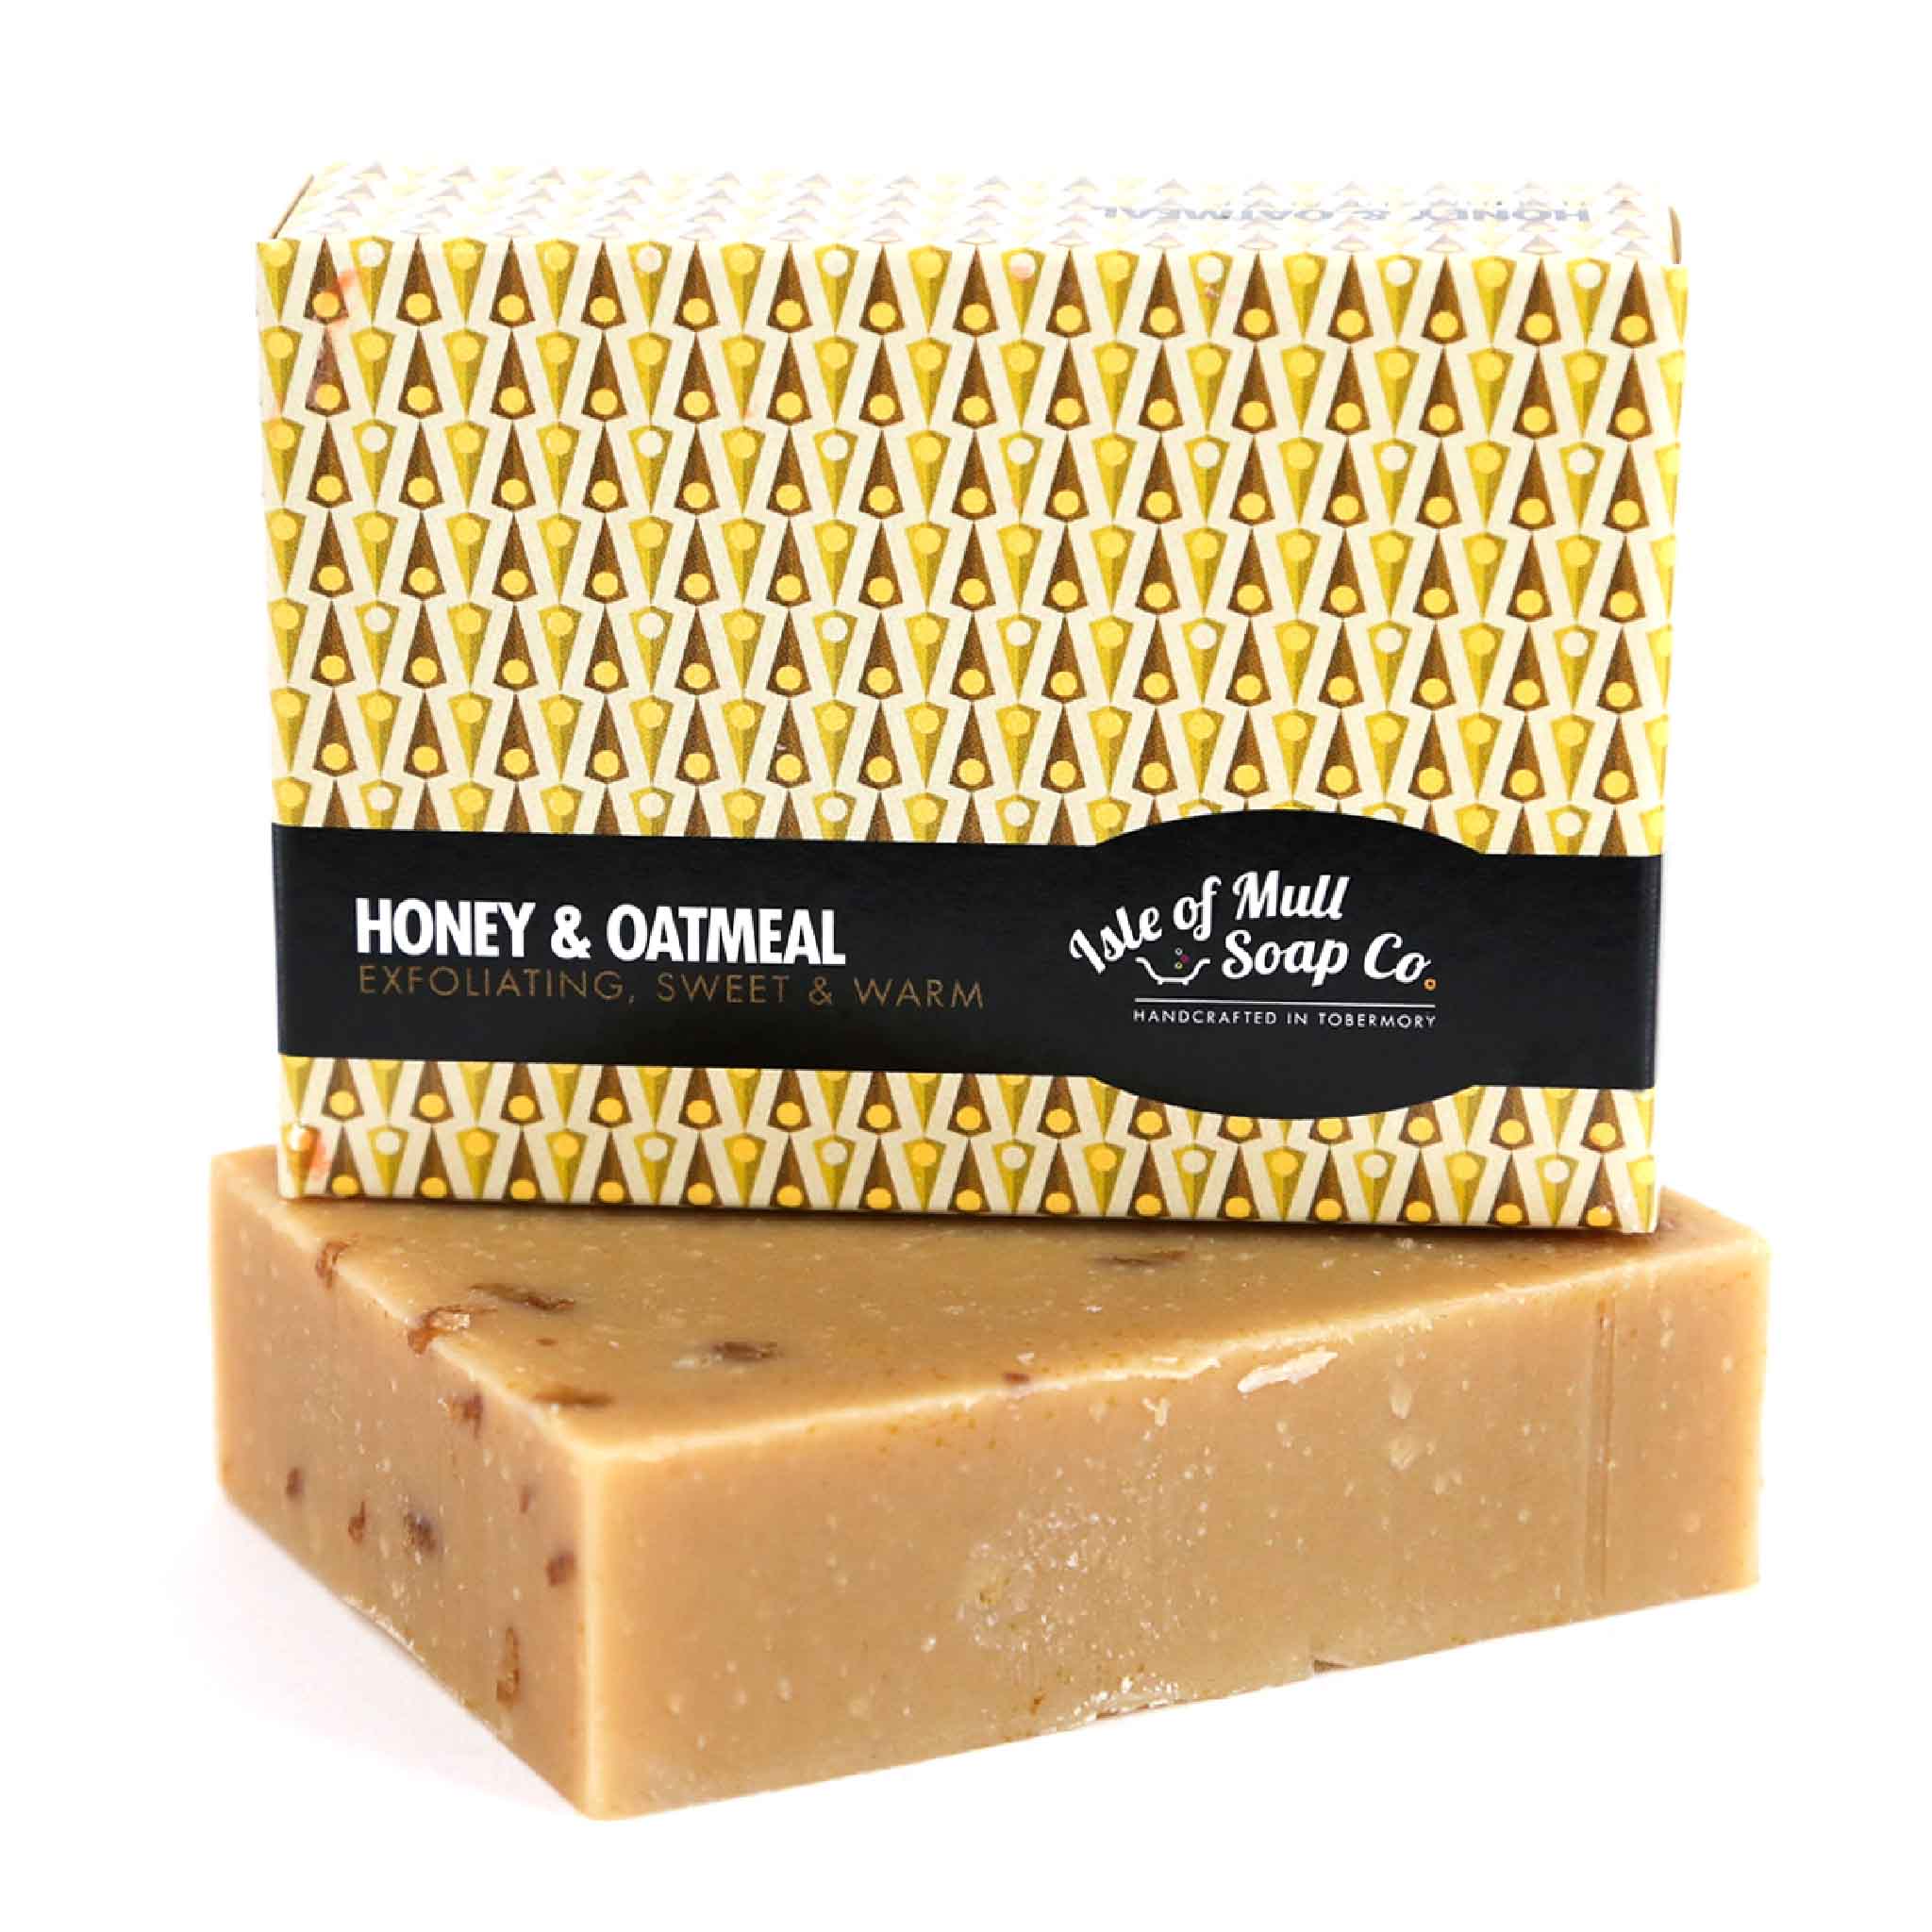 Honey & Oatmeal Isle of Mull Soap